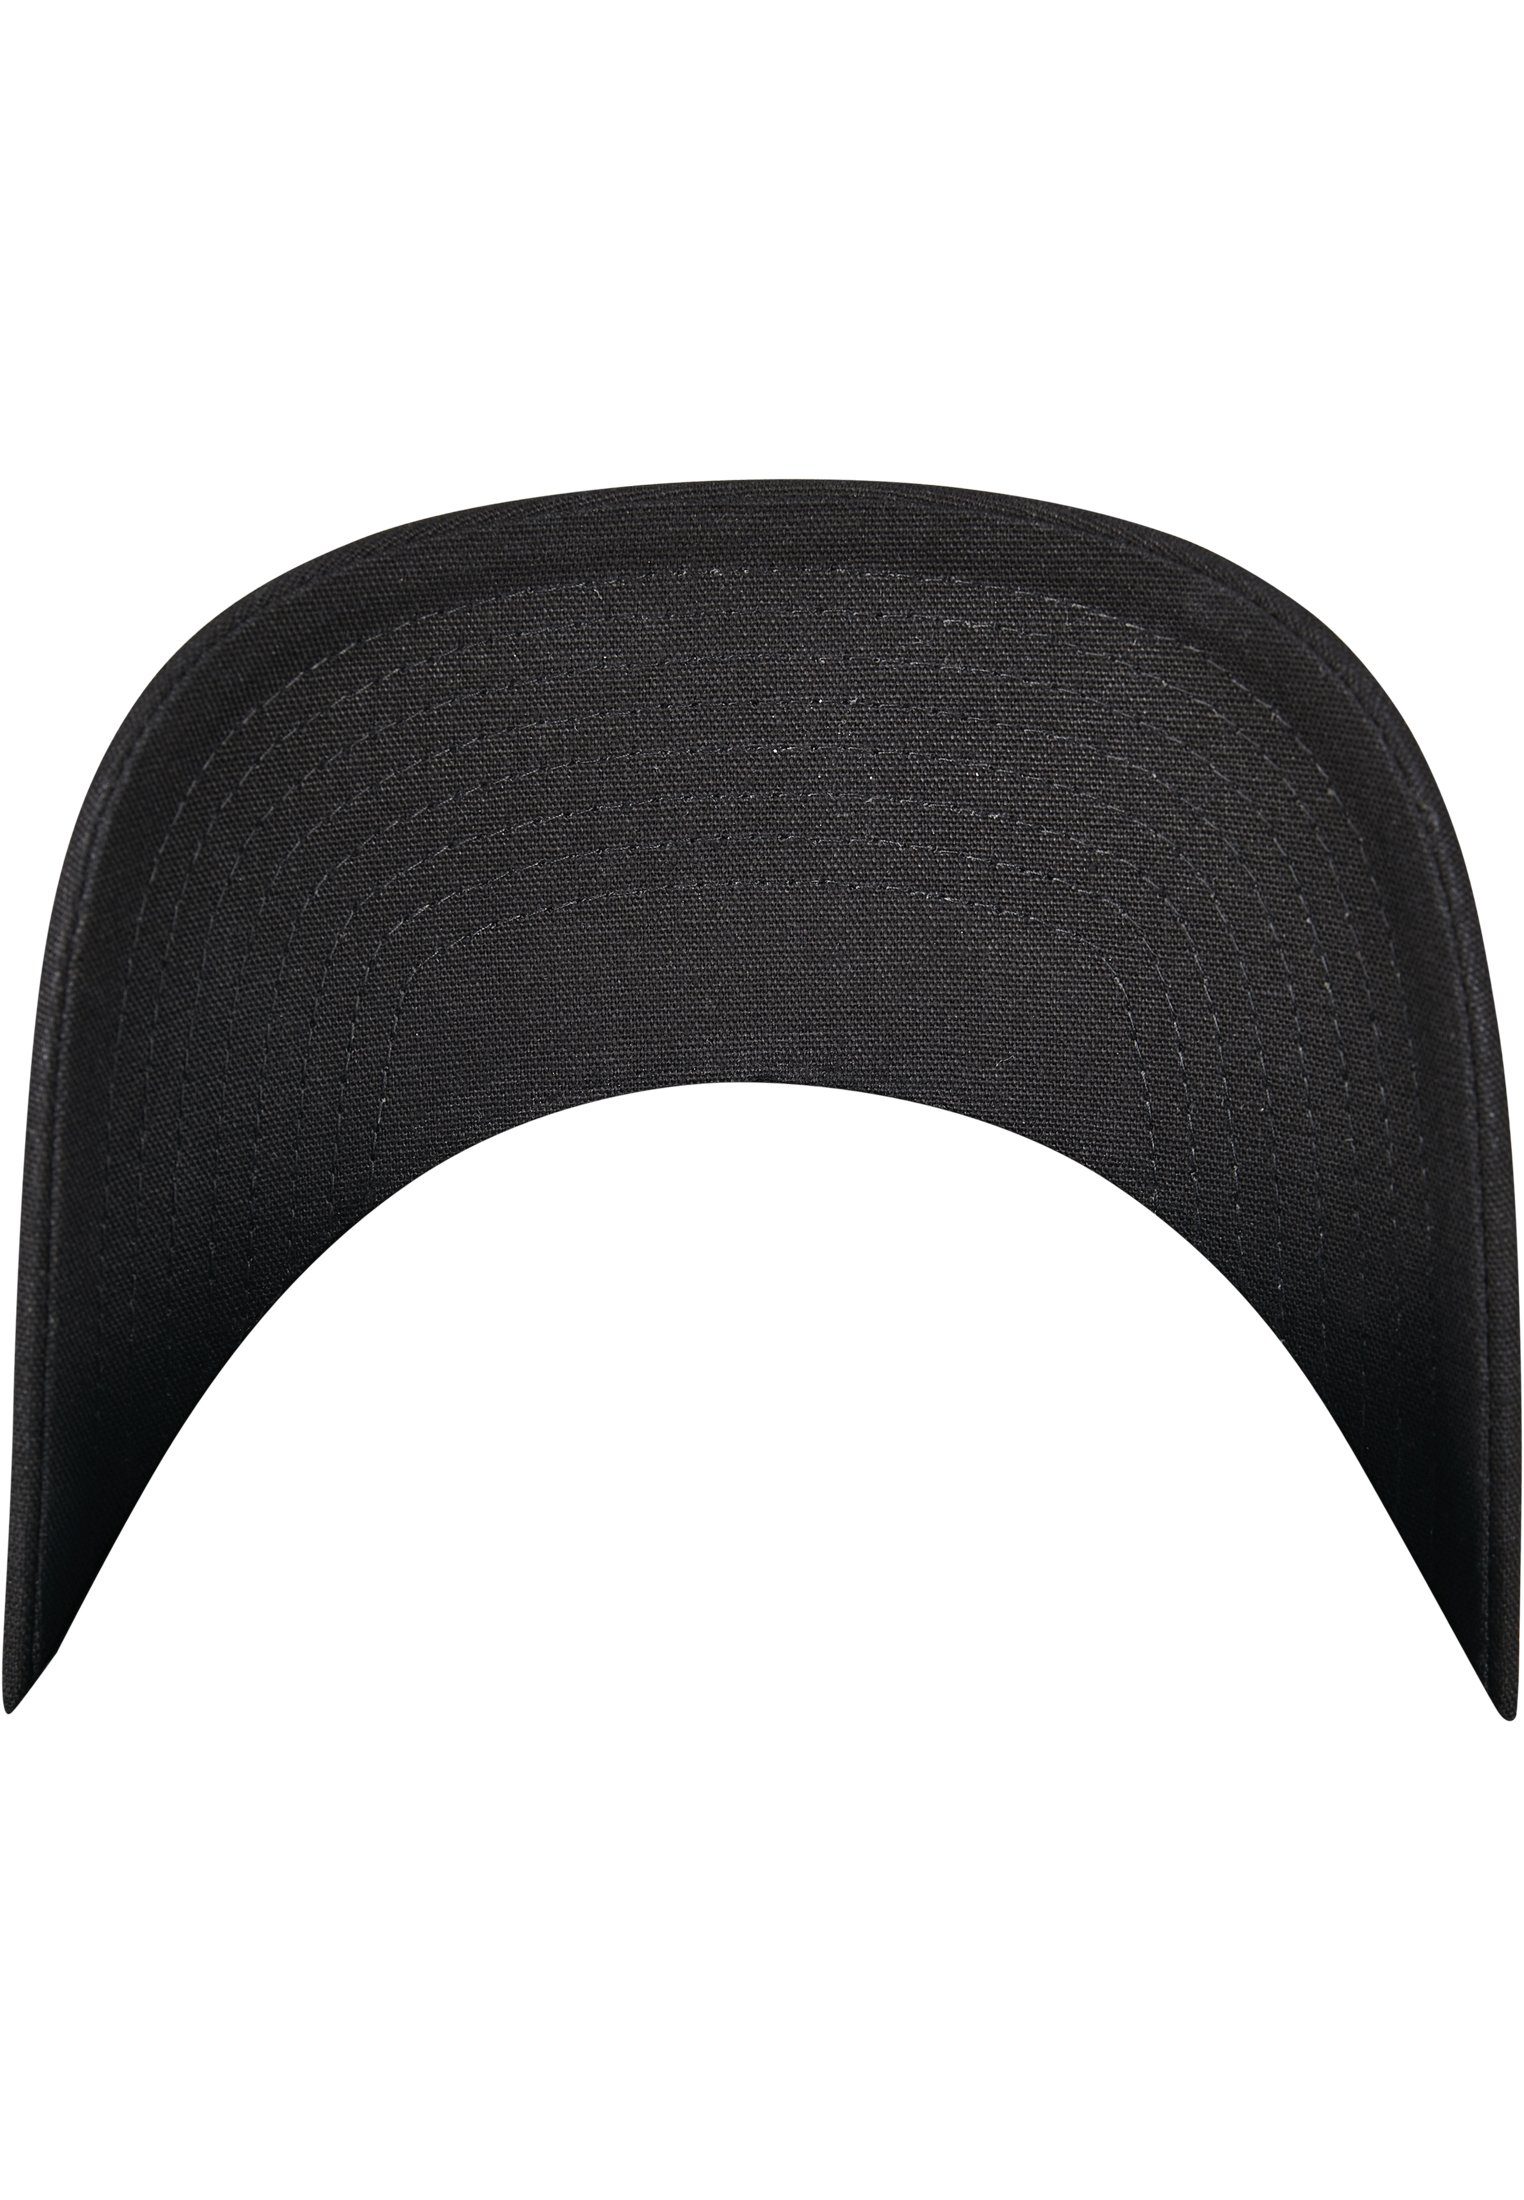 black Cap 6-Panel Metal Curved Snap Flex Snapback Flexfit